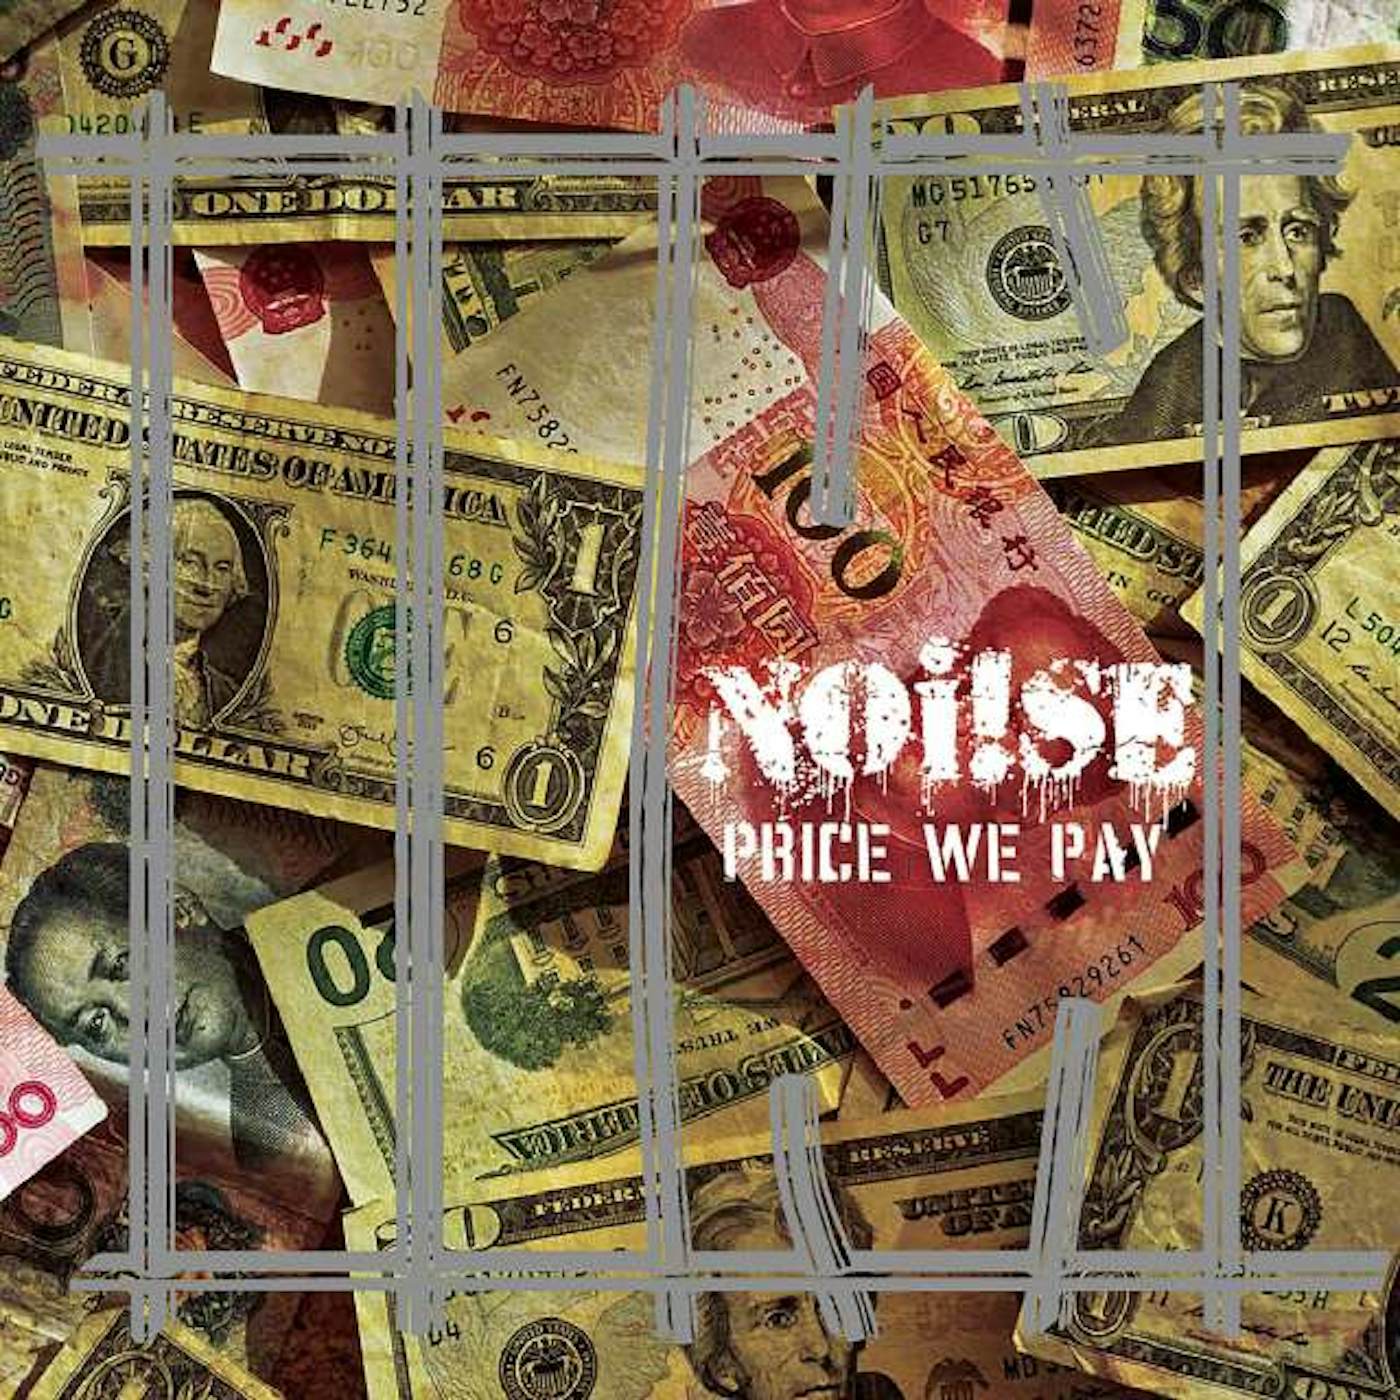 Noi!se Price We Pay Vinyl Record